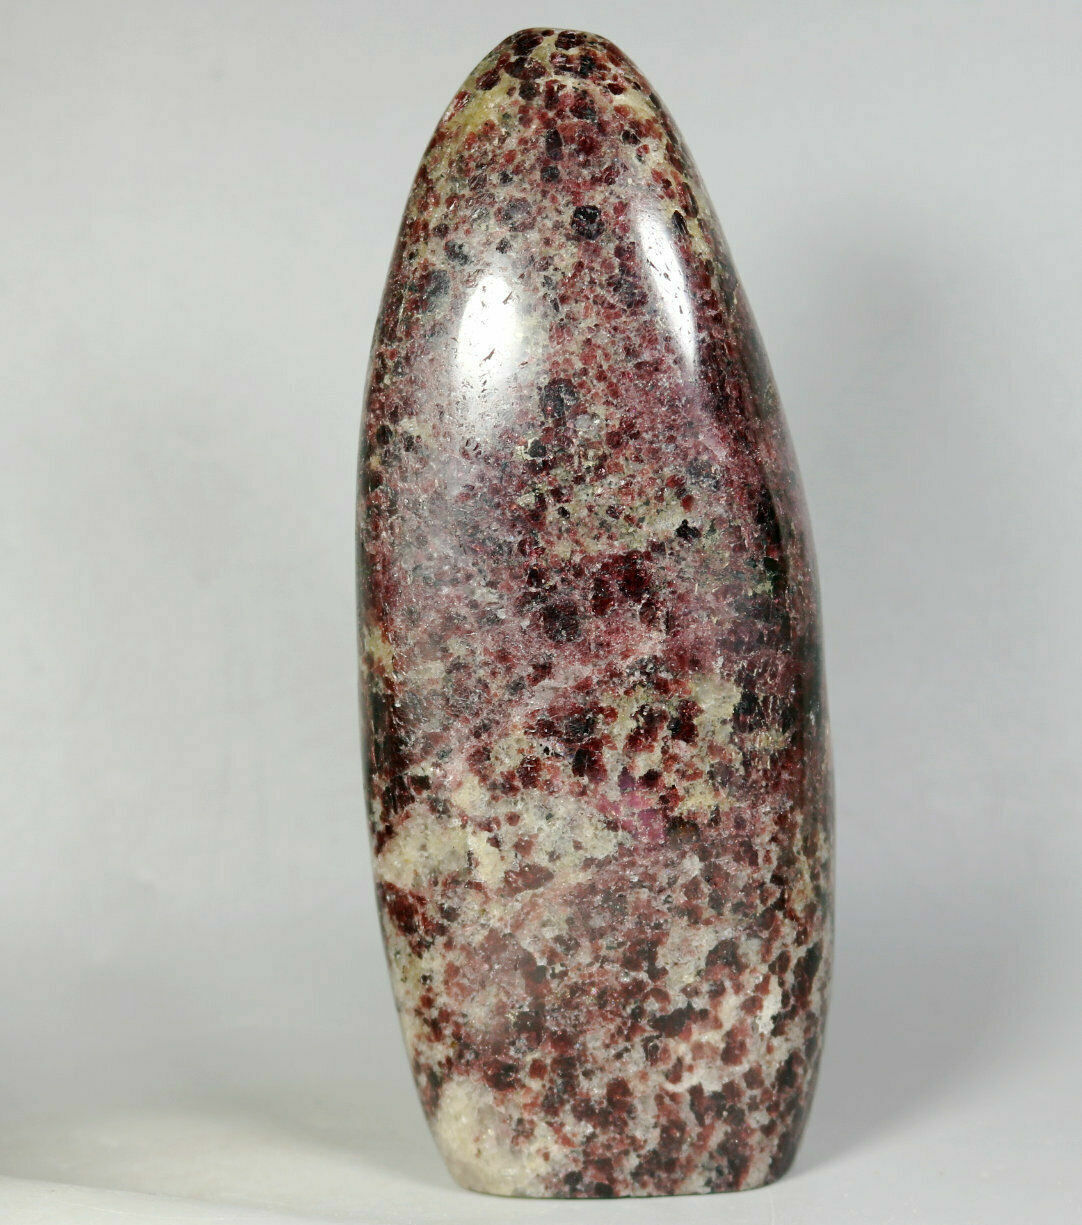 1.91lb Natural Beauty Rare Red Garnet Quartz Crystal Stont Mineral Specimens